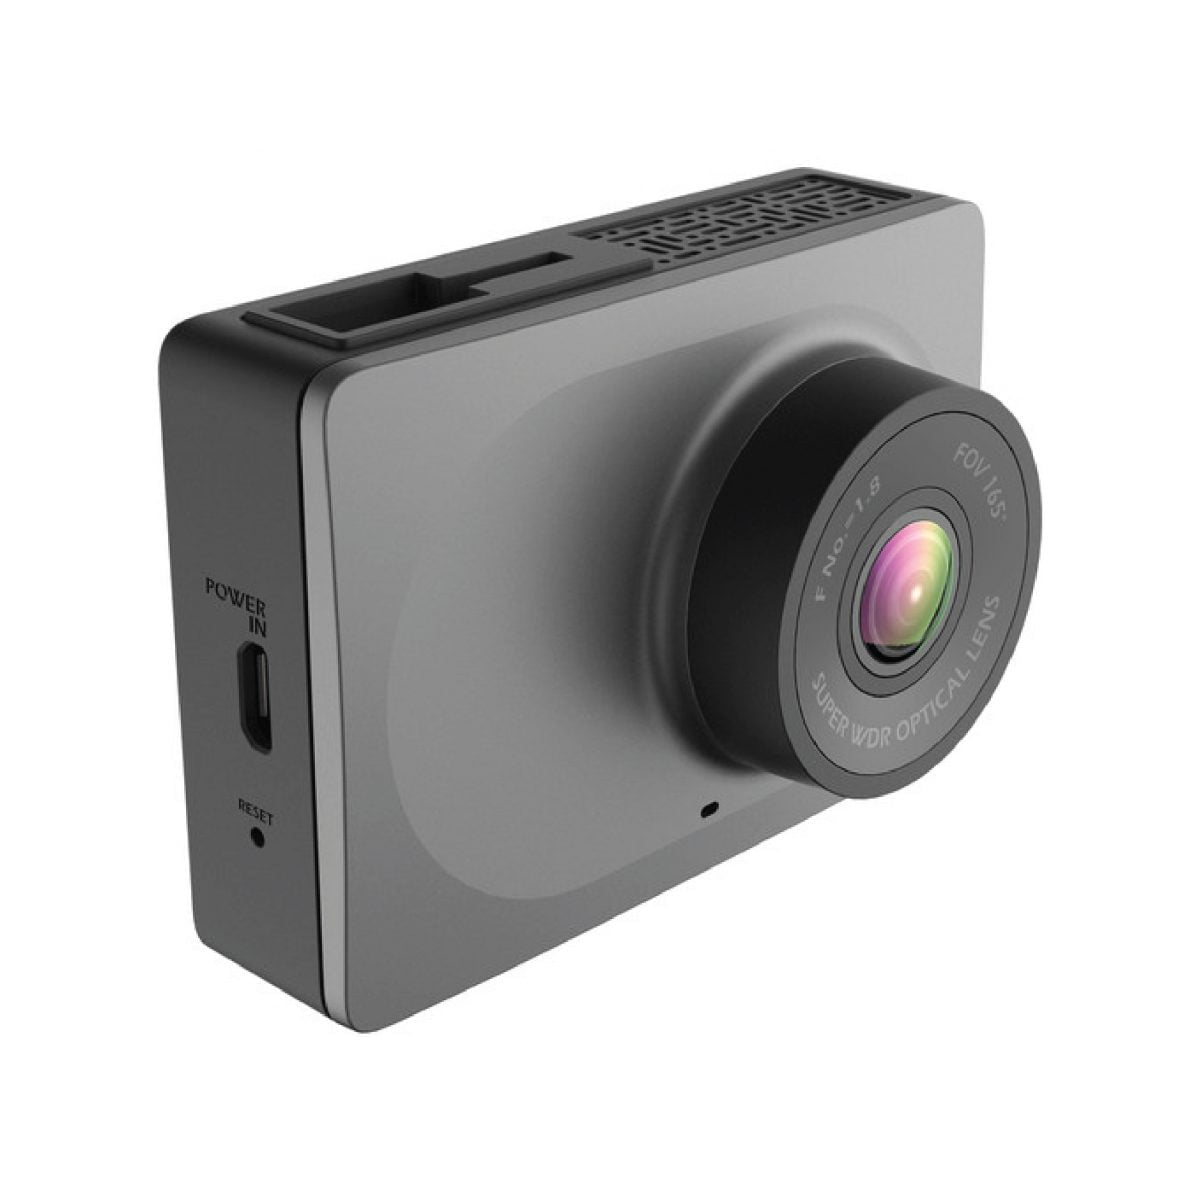 Yi Camera 06 Xiaomi &Amp;Lt;H1&Amp;Gt;Yi - Compact Dash Cam Car Dashboard Camera With 2.7” Screen, 130° Wdr Lens, G-Sensor, Loop Recording&Amp;Lt;/H1&Amp;Gt; 1080P60 Full Hd 165 Wide Angle Front Dashboard Camera Car Dvr Vehicle Recorder With Adas, G-Sensor, Phone App, Wdr, Loop Recording - Grey Https://Youtu.be/Tsowlpdc0U4 Yi - Compact Dash Cam Car Yi - Compact Dash Cam Car Dashboard Camera With 2.7” Screen, 130° Wdr Lens, G-Sensor, Loop Recording